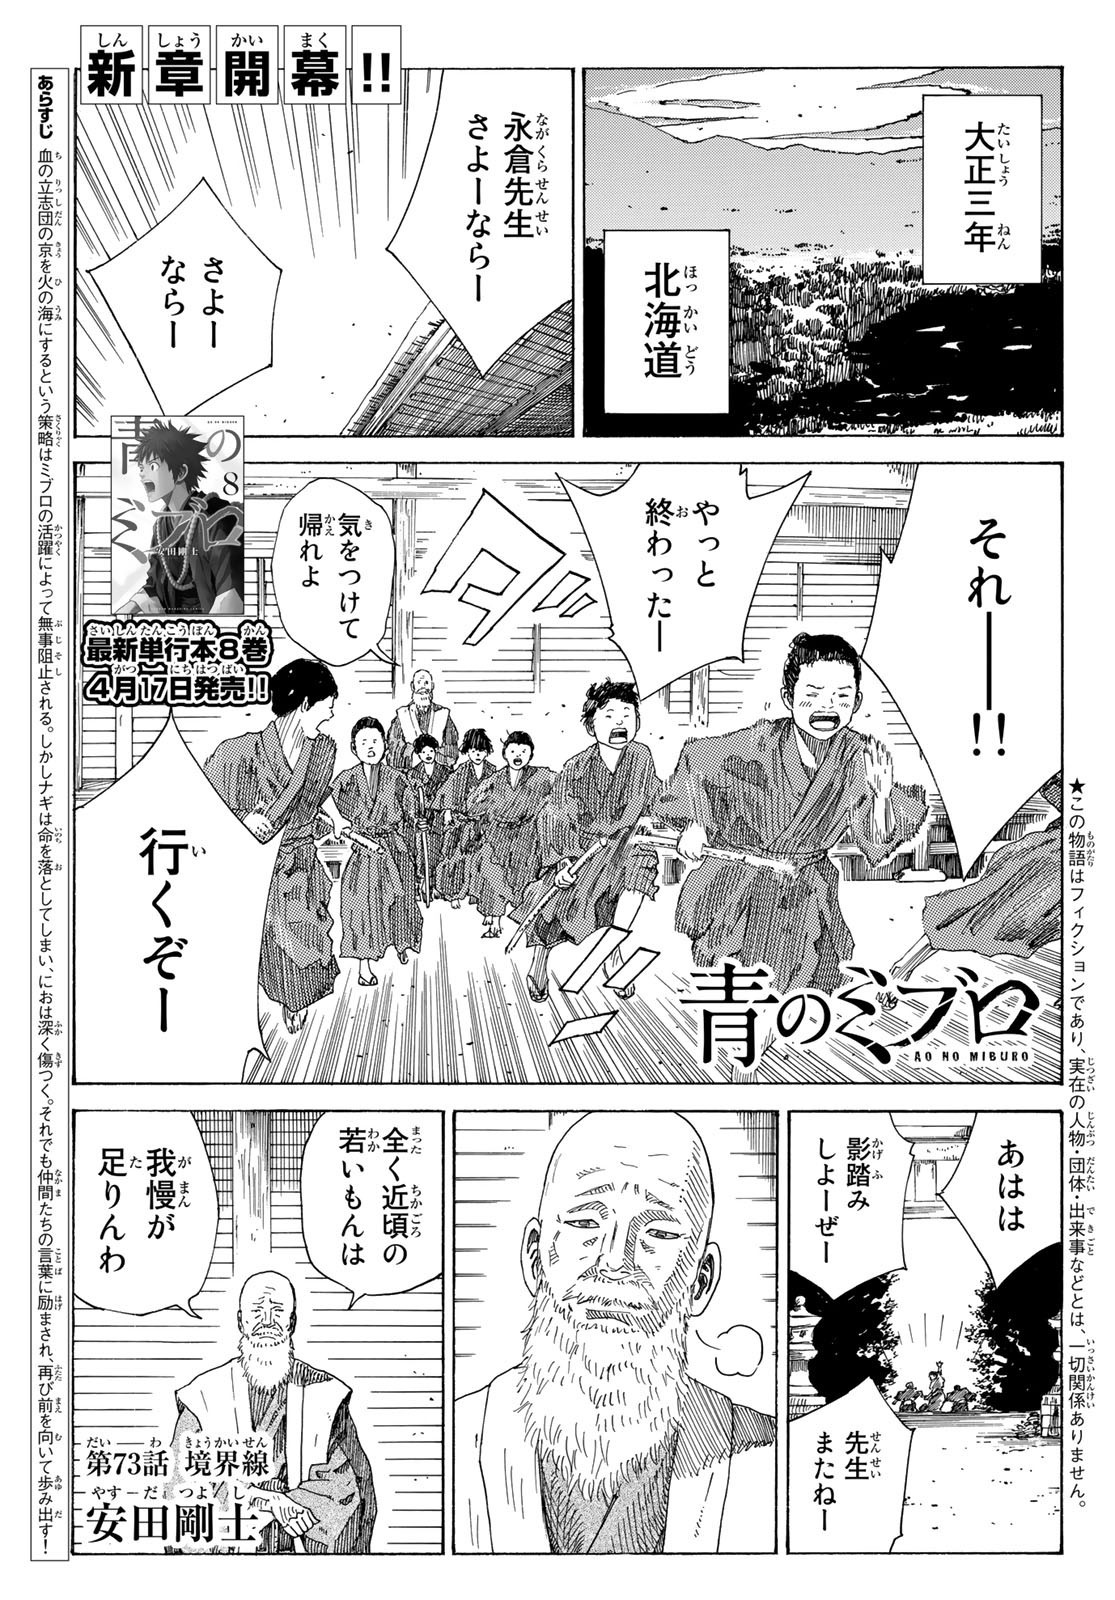 Ao no Miburo - Chapter 073 - Page 1